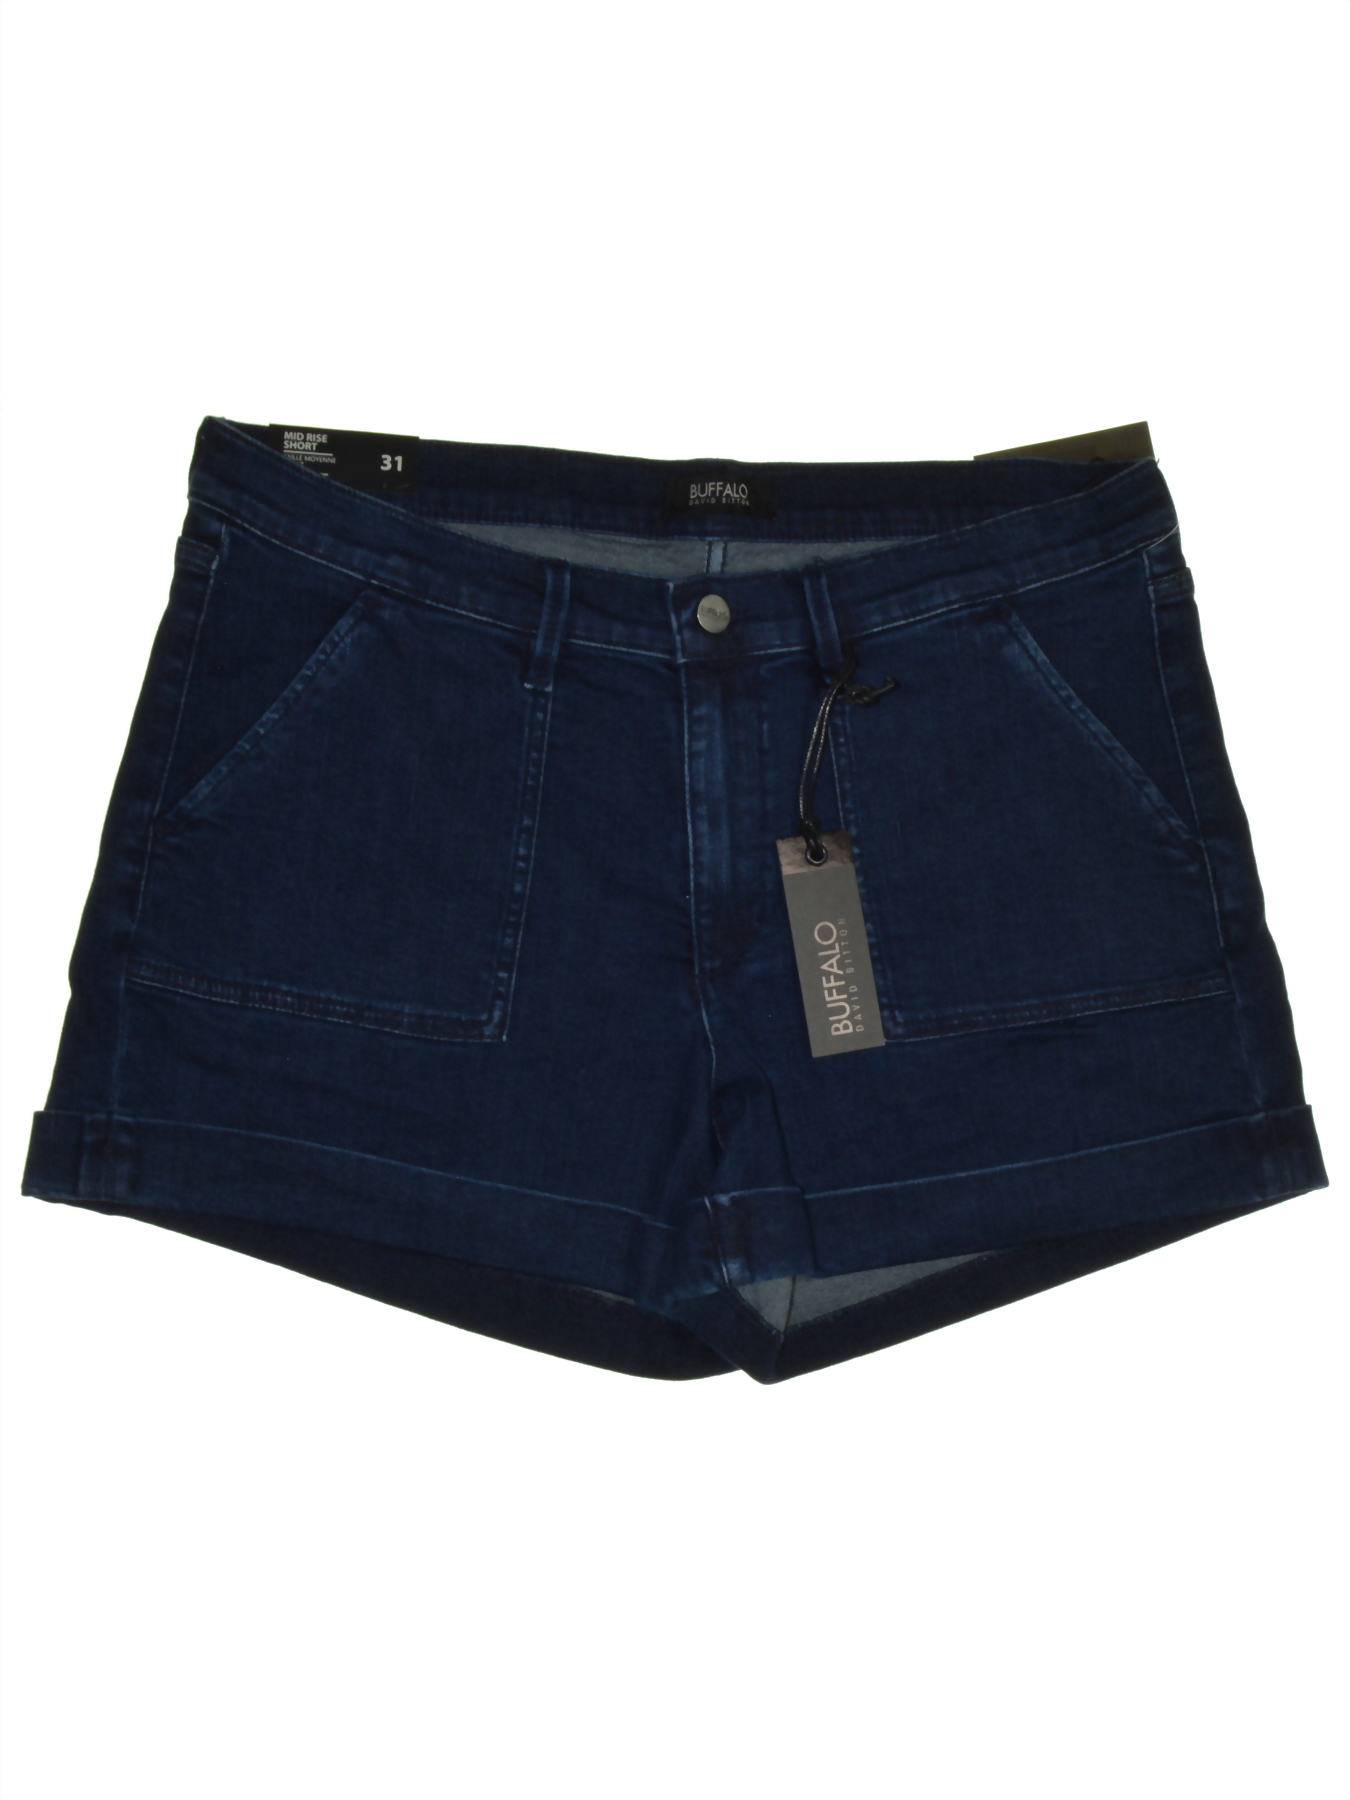 Buffalo Jeans Women Size 31 Dark Blue Denim Shorts Pants | Canerra